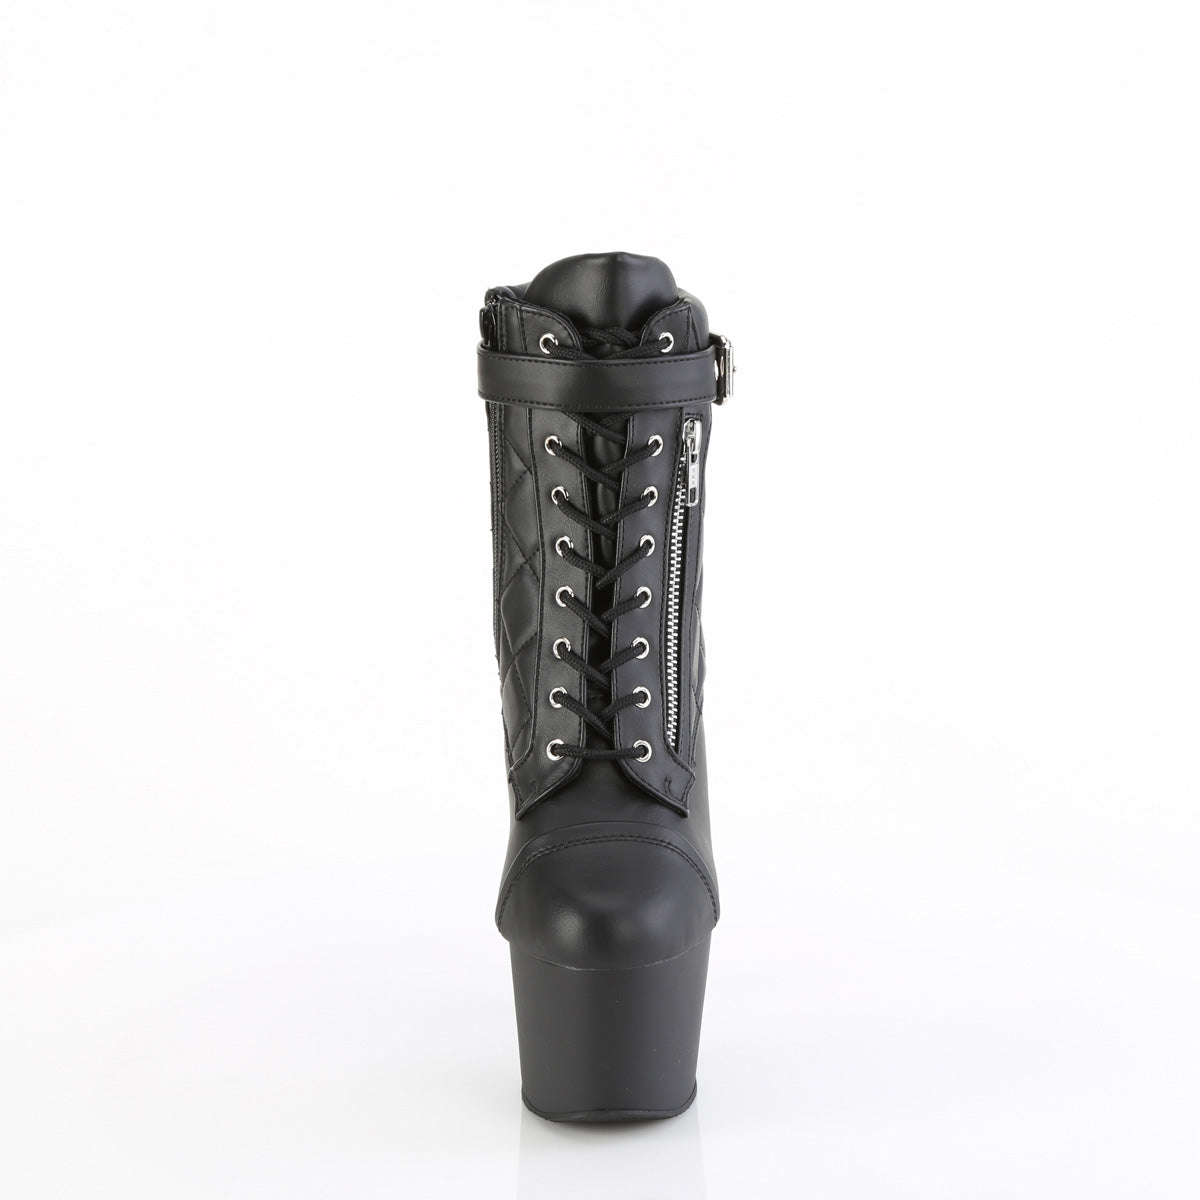 ADORE-700-05 Black Calf High Boots